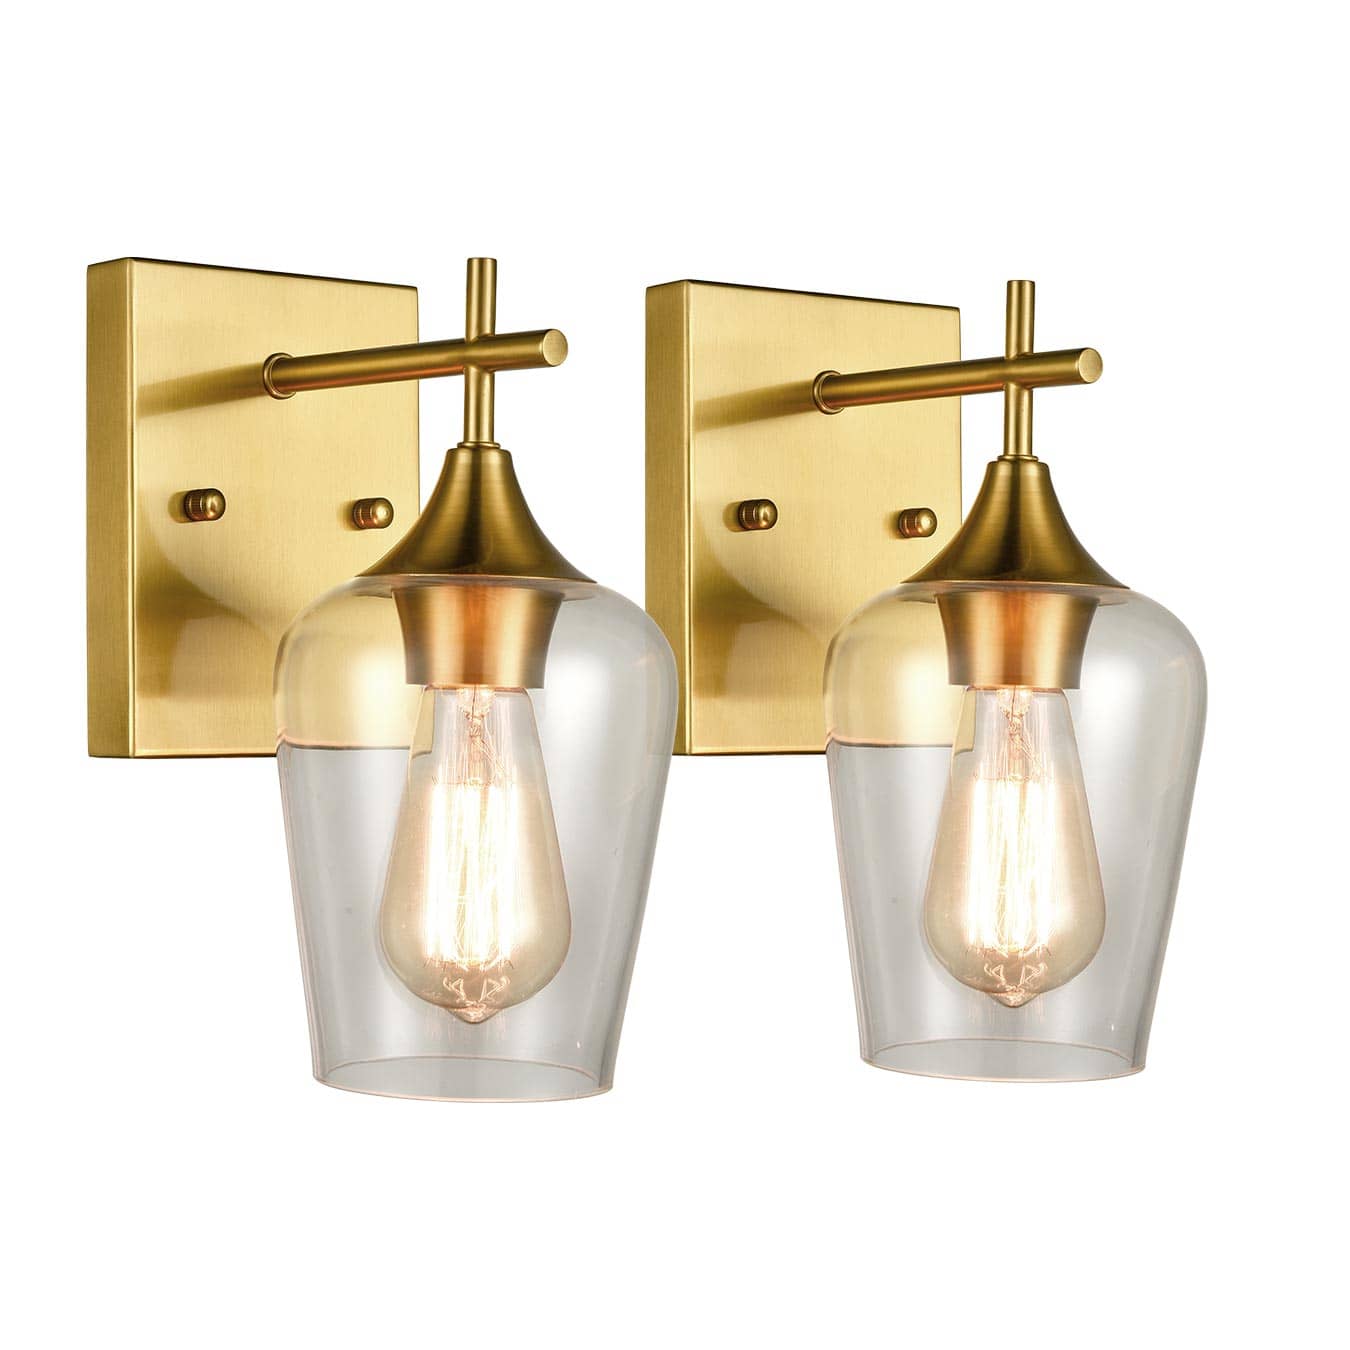 CLAXY Lighting Industrial 2-Light Vanity Light Metal Wall Sconces Bathroom Lamps 